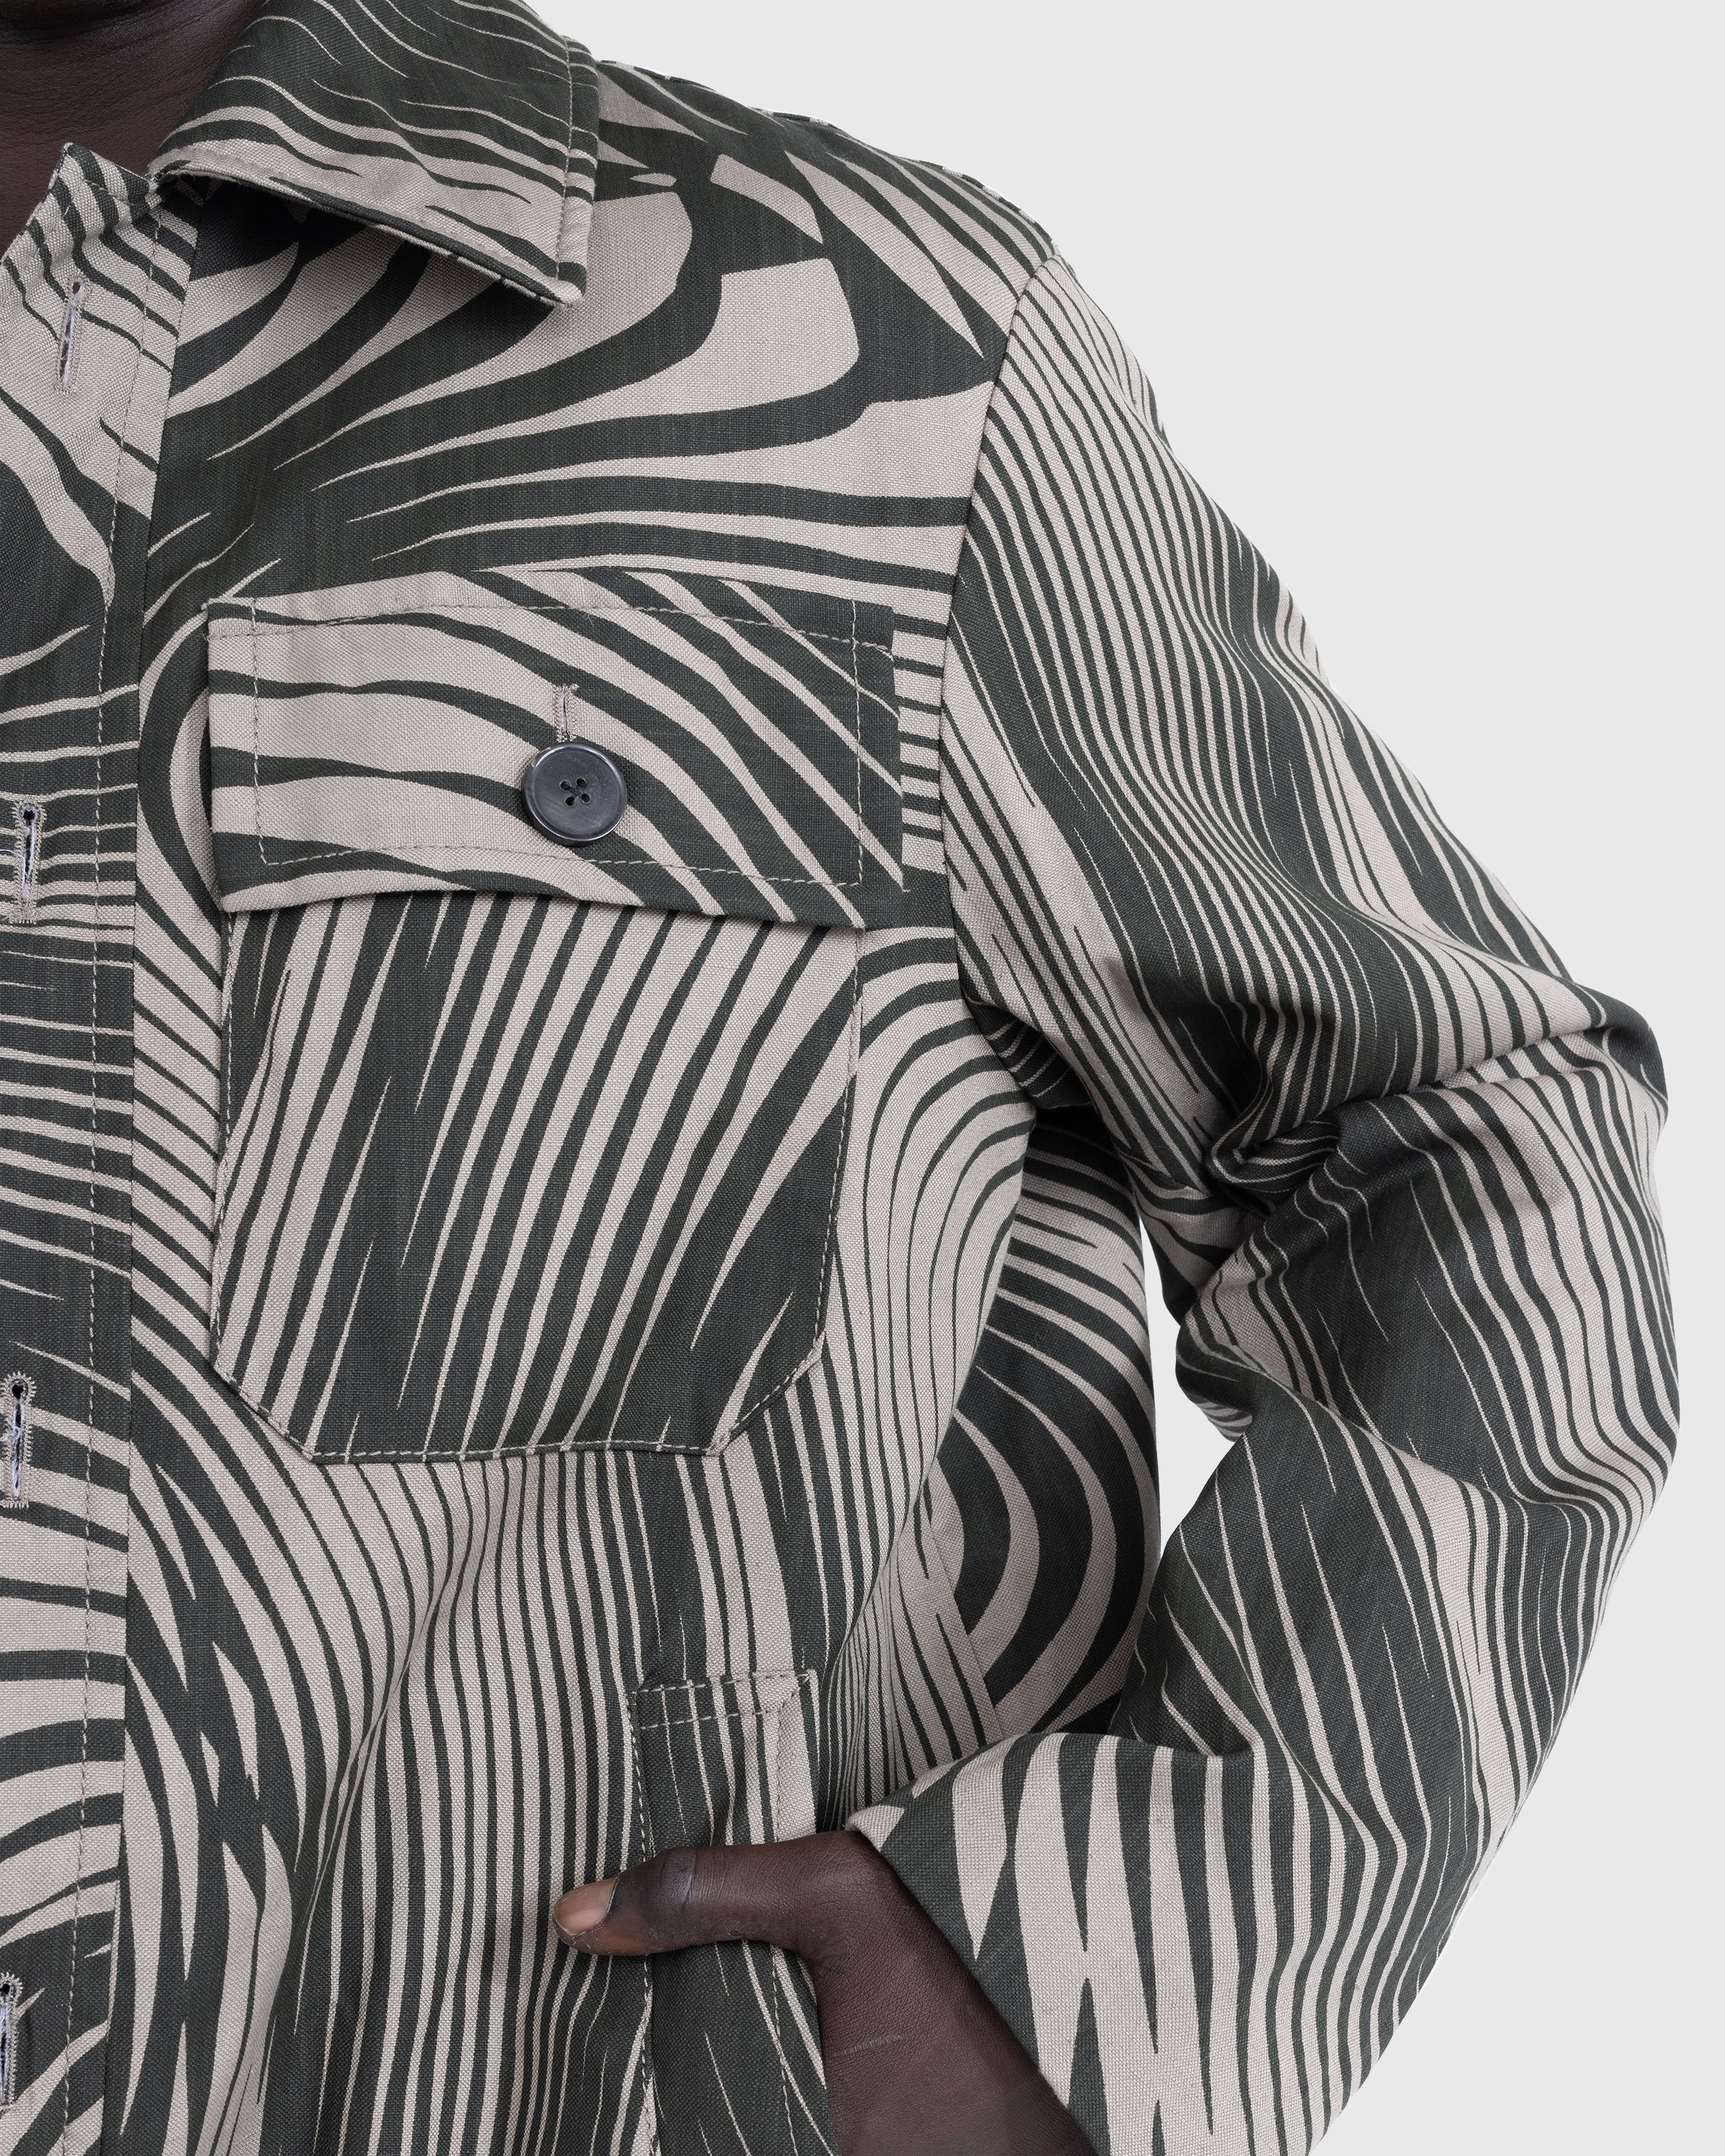 Dries van Noten - Valko Jacket Anthracite - Clothing - Grey - Image 6